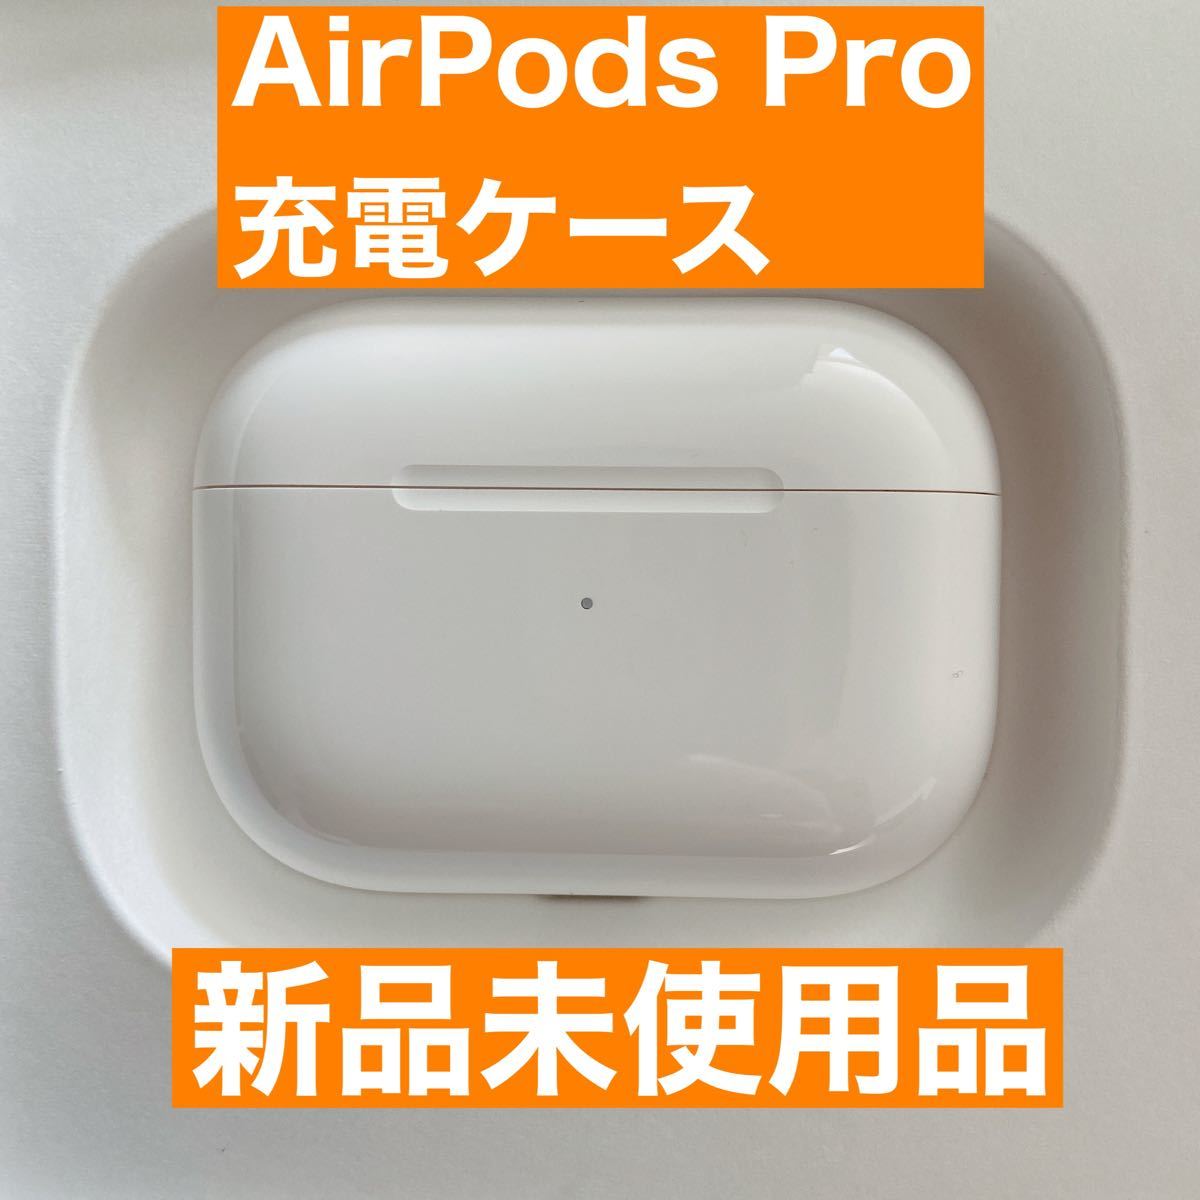 新品 充電器 AirPods Pro 充電ケース Apple 国内正規品 - rehda.com